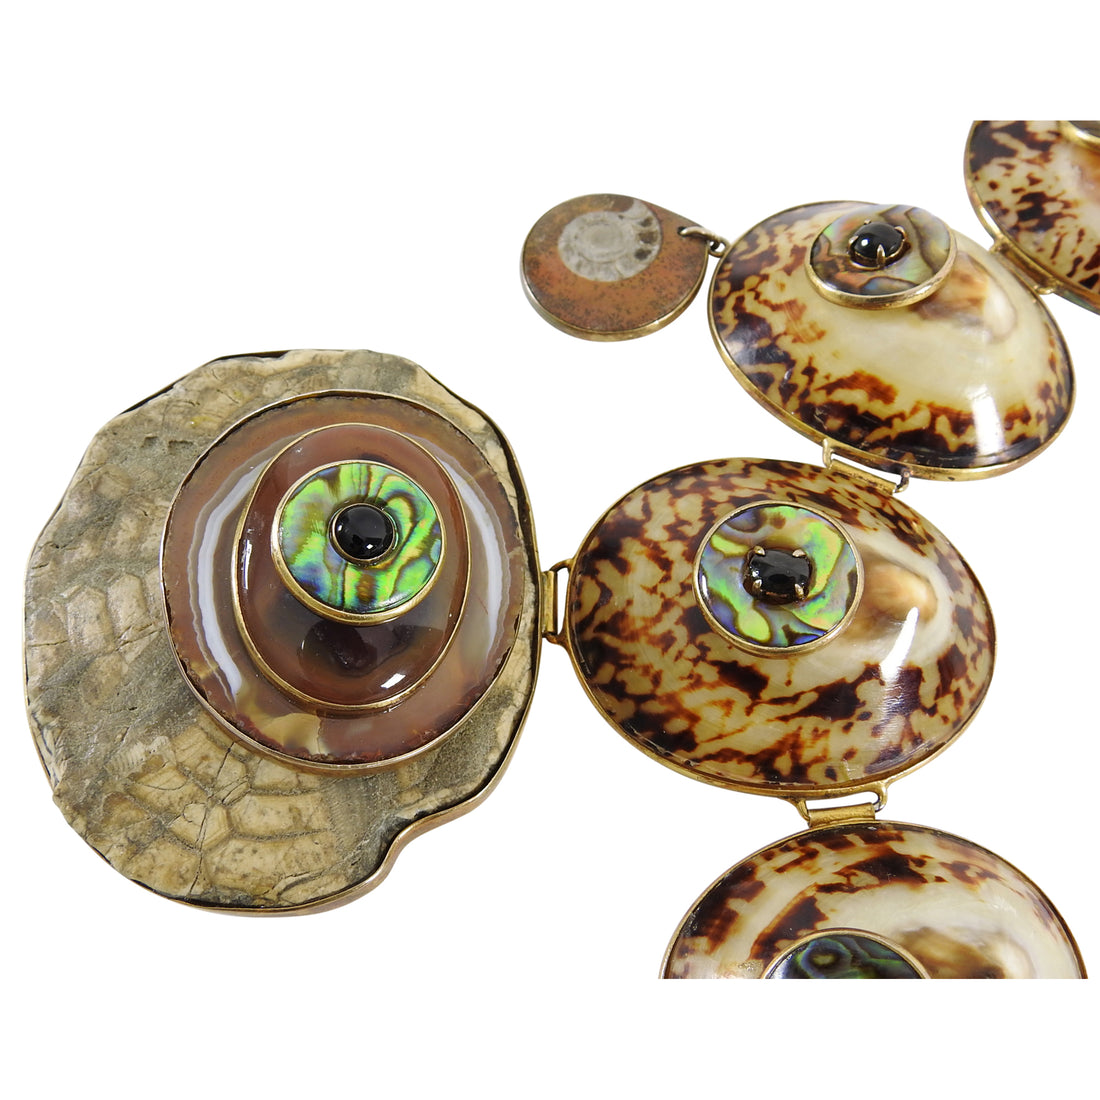 Tony Duquette 1999 Talisman Bib Necklace in Box - Ammonite and Shells